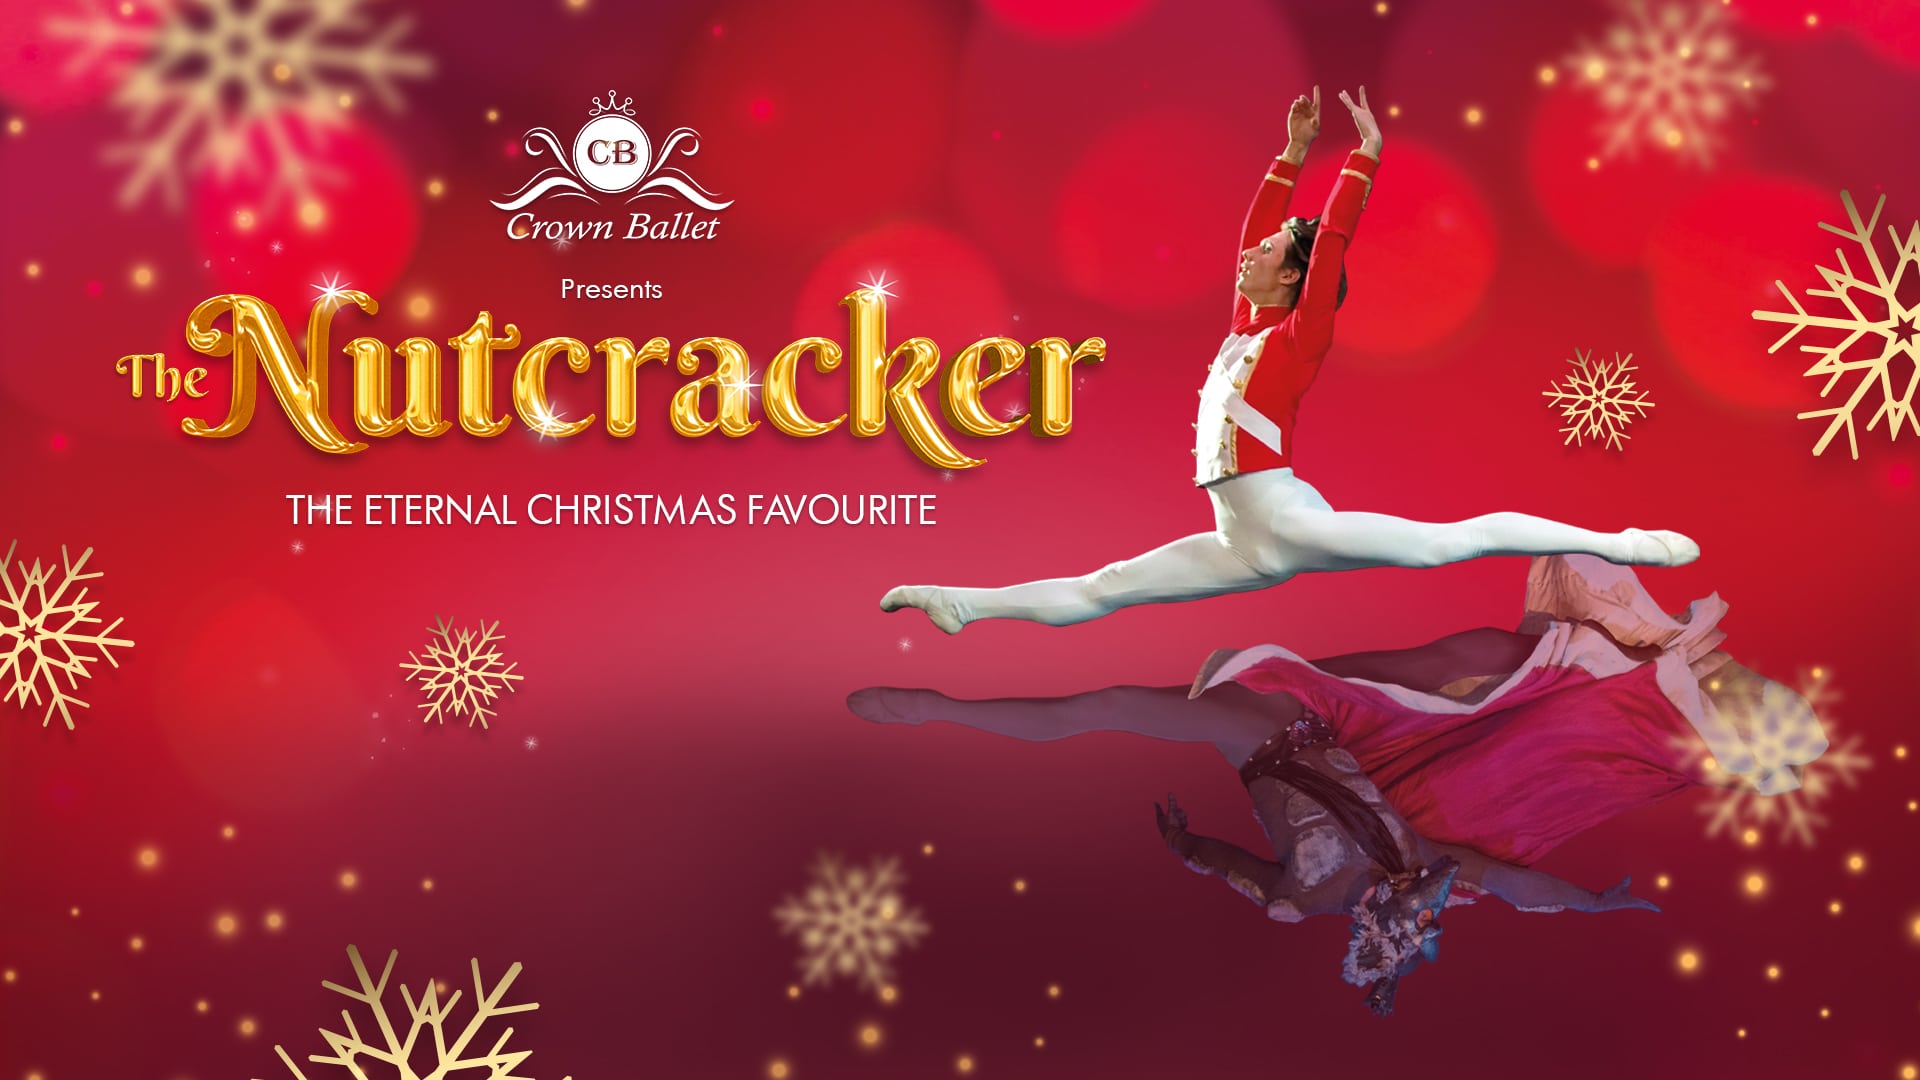 Crown Ballet presents The Nutcracker